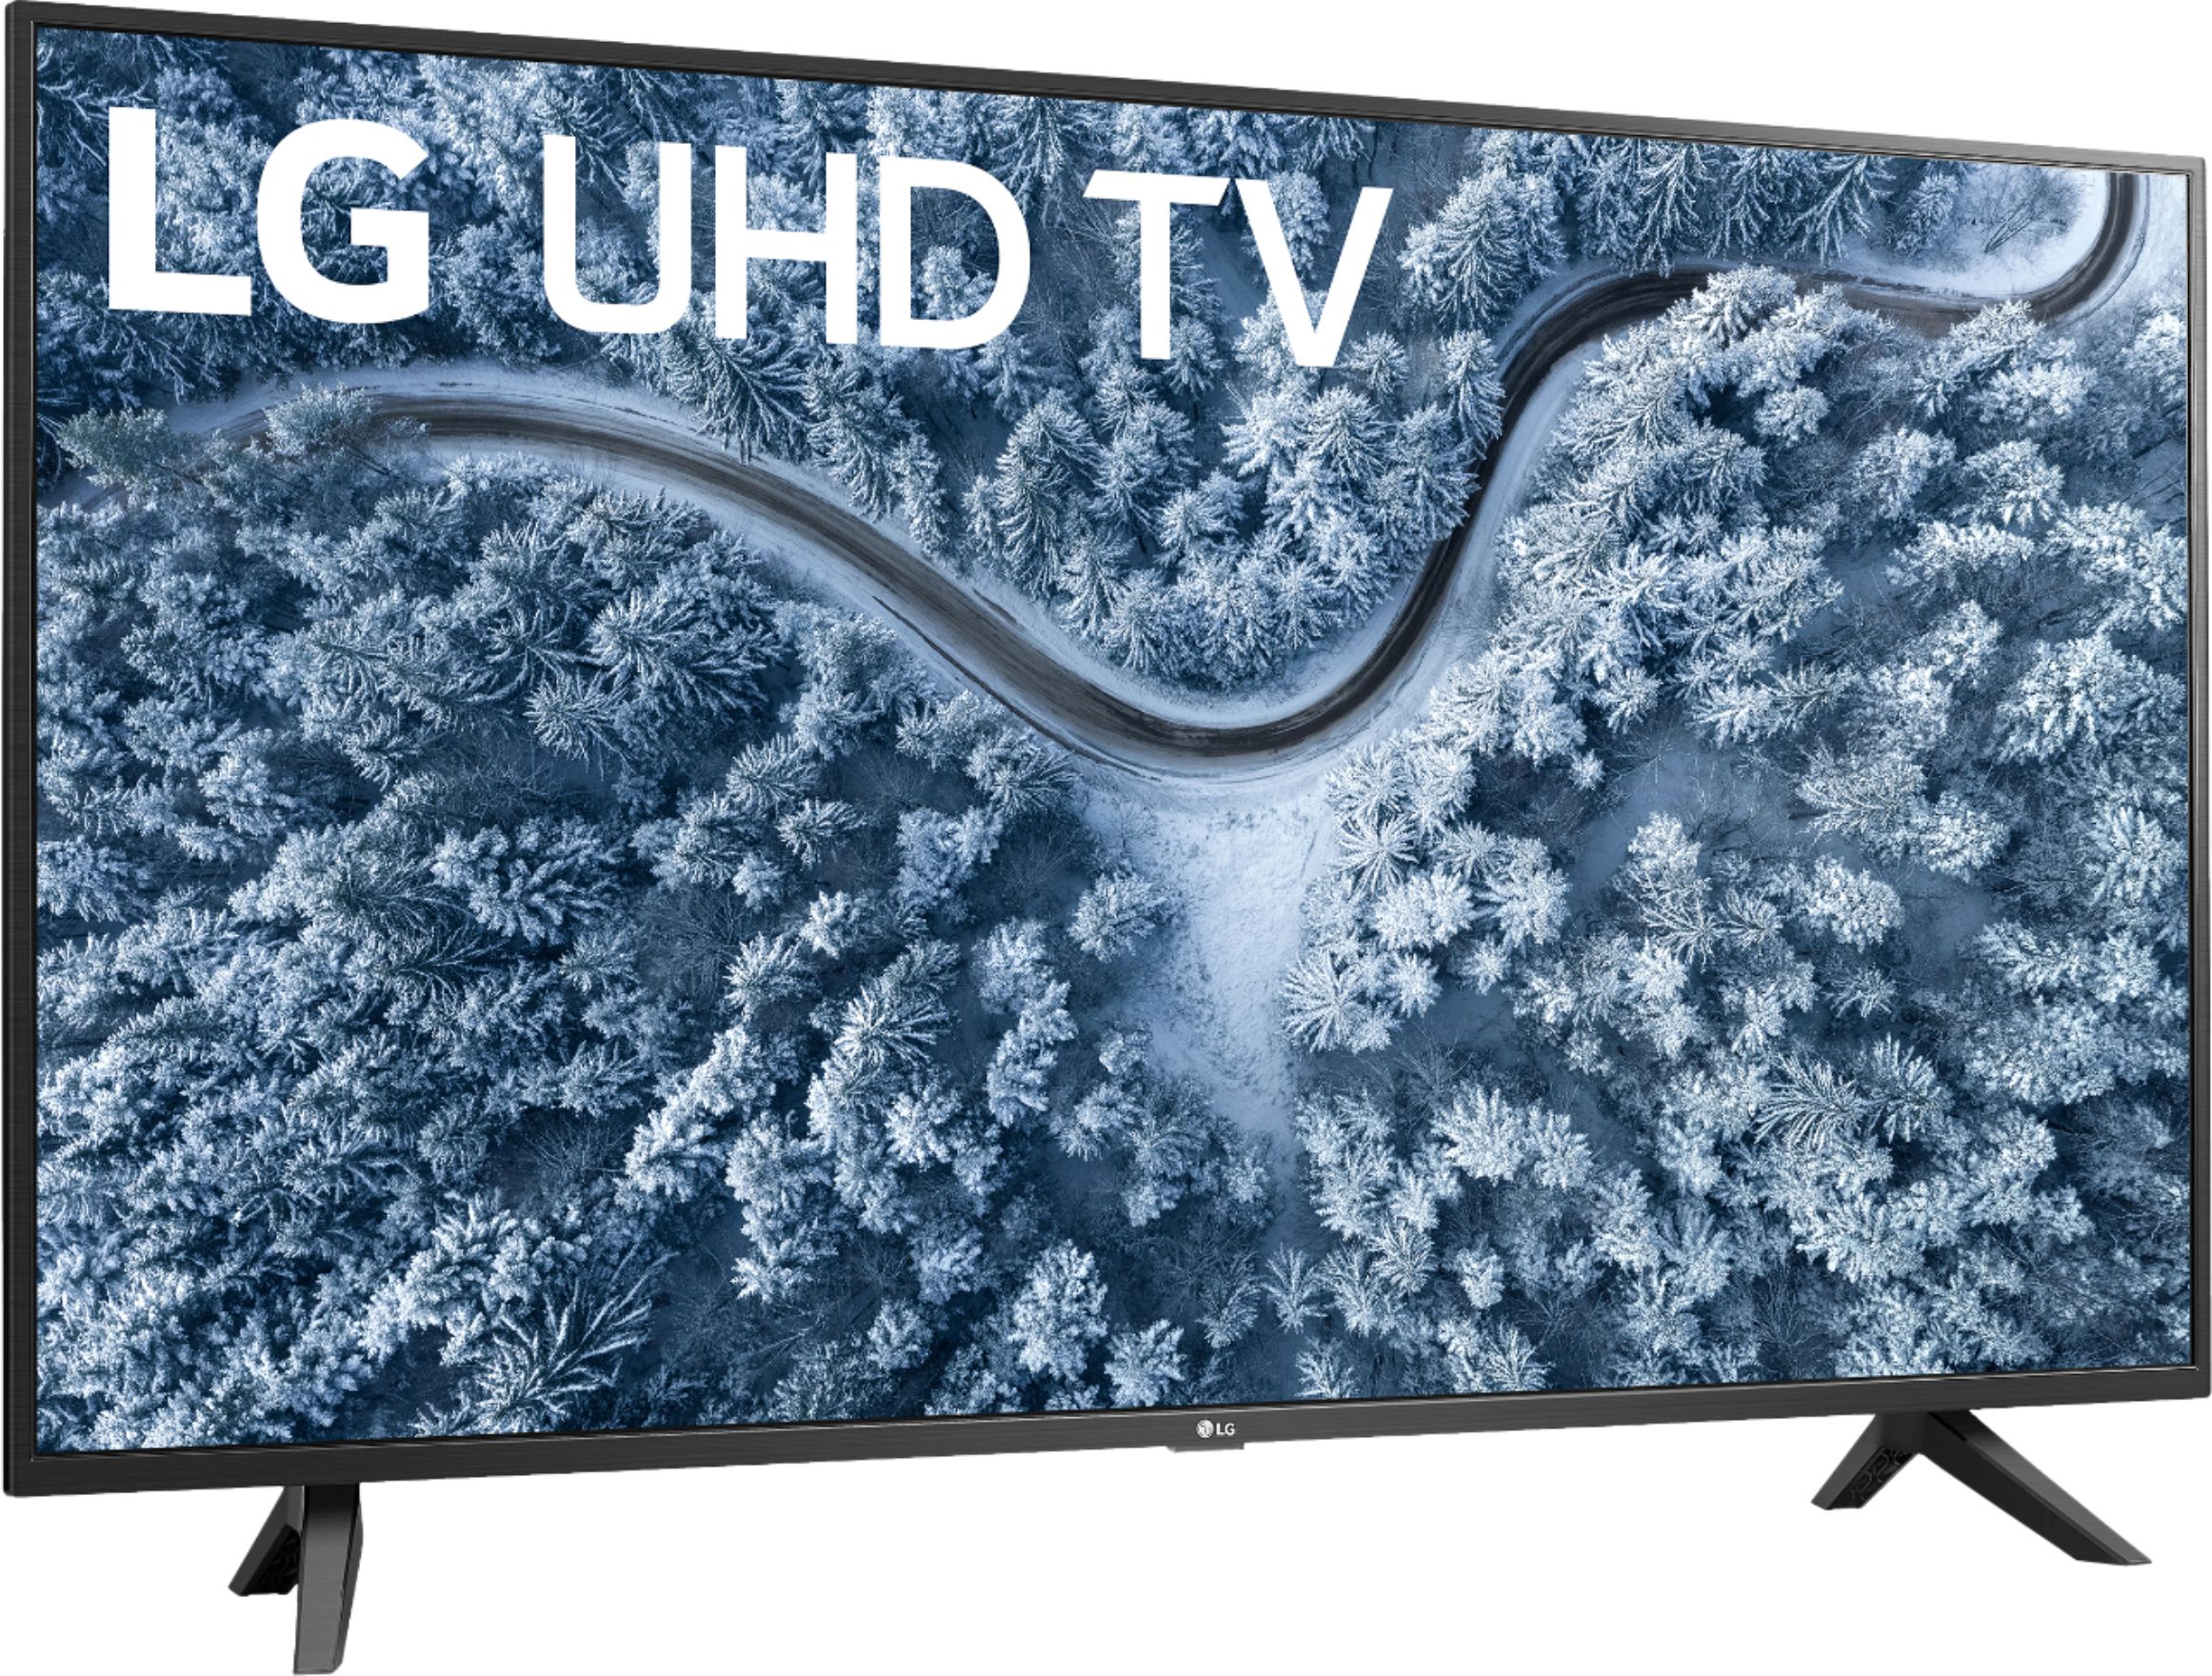 Angle View: LG - 43” Class UP7000 Series LED 4K UHD Smart webOS TV